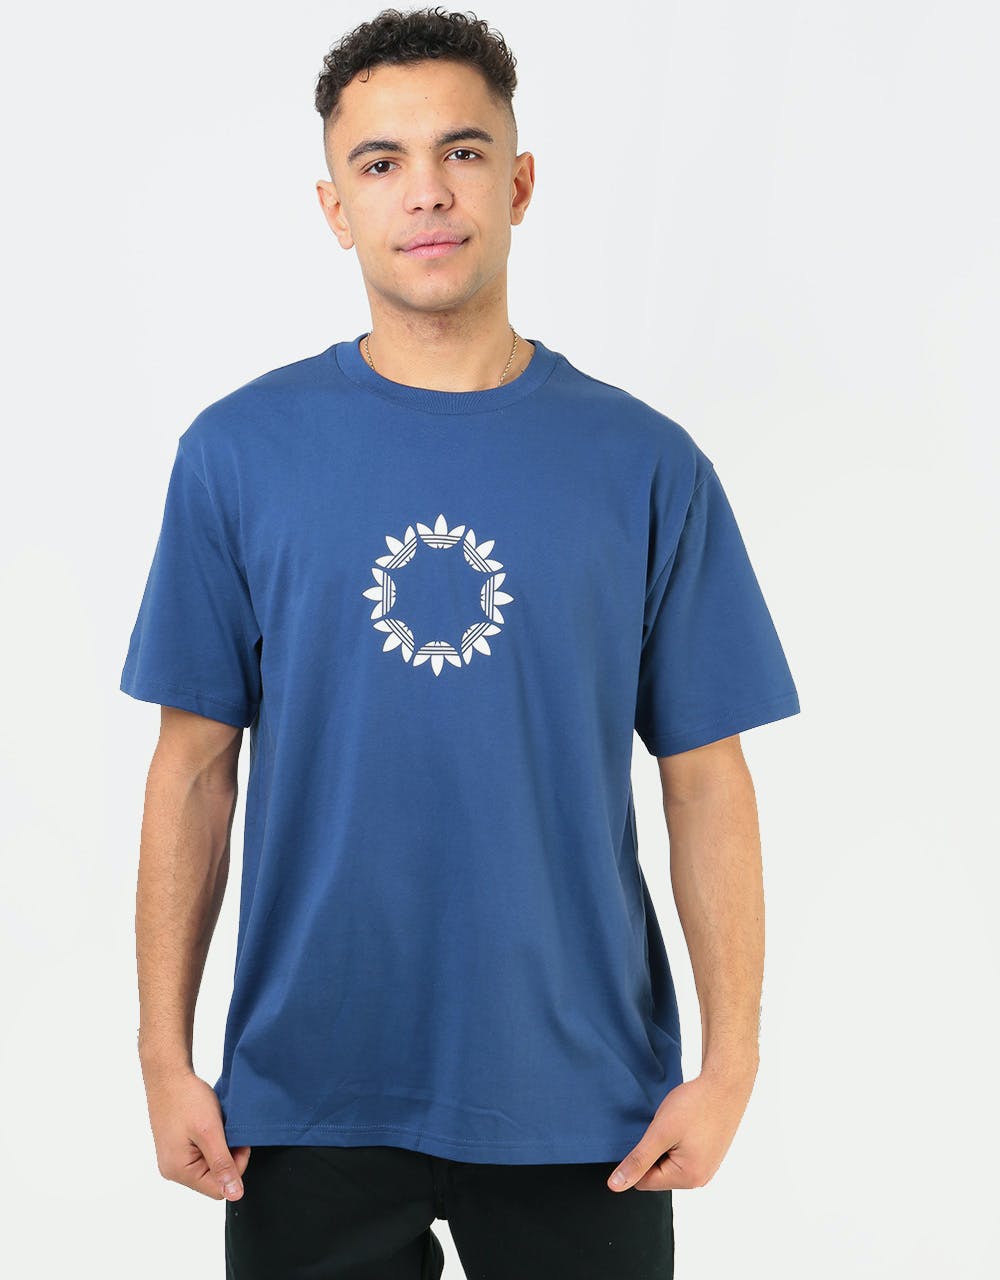 Adidas Pinwheel T-Shirt - Tech Indigo/Off White